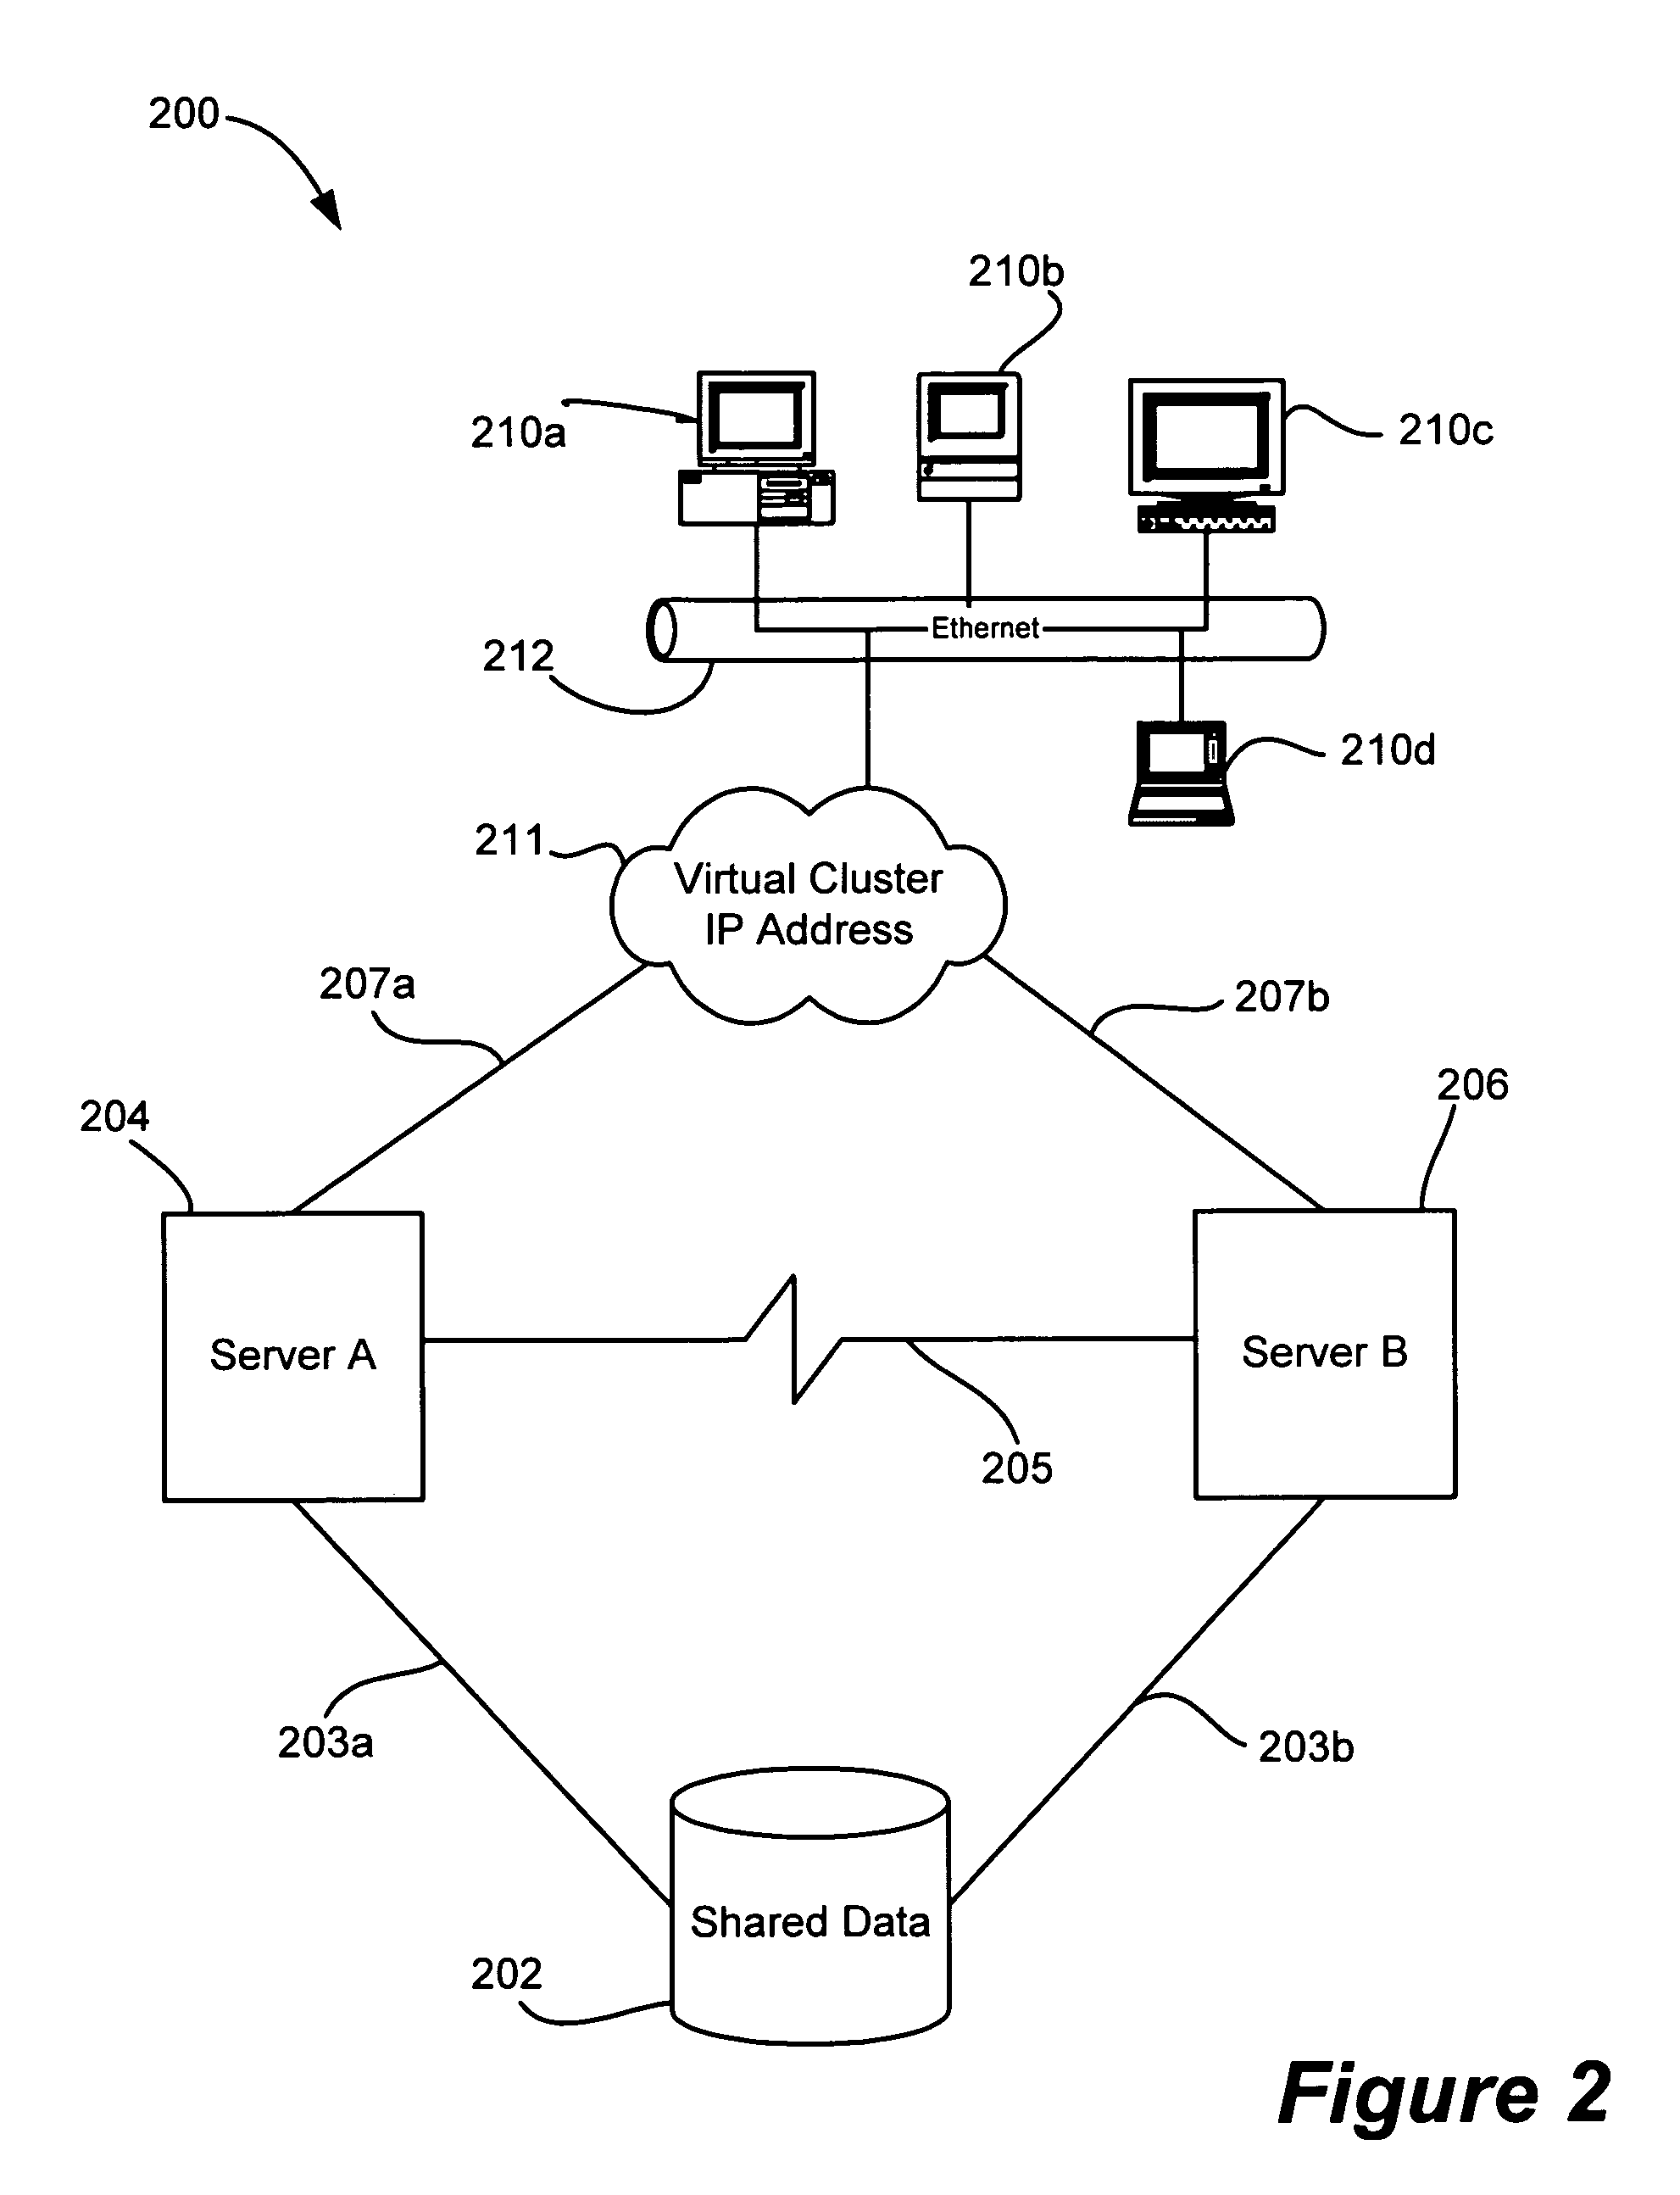 Transaction transfer during a failover of a cluster controller